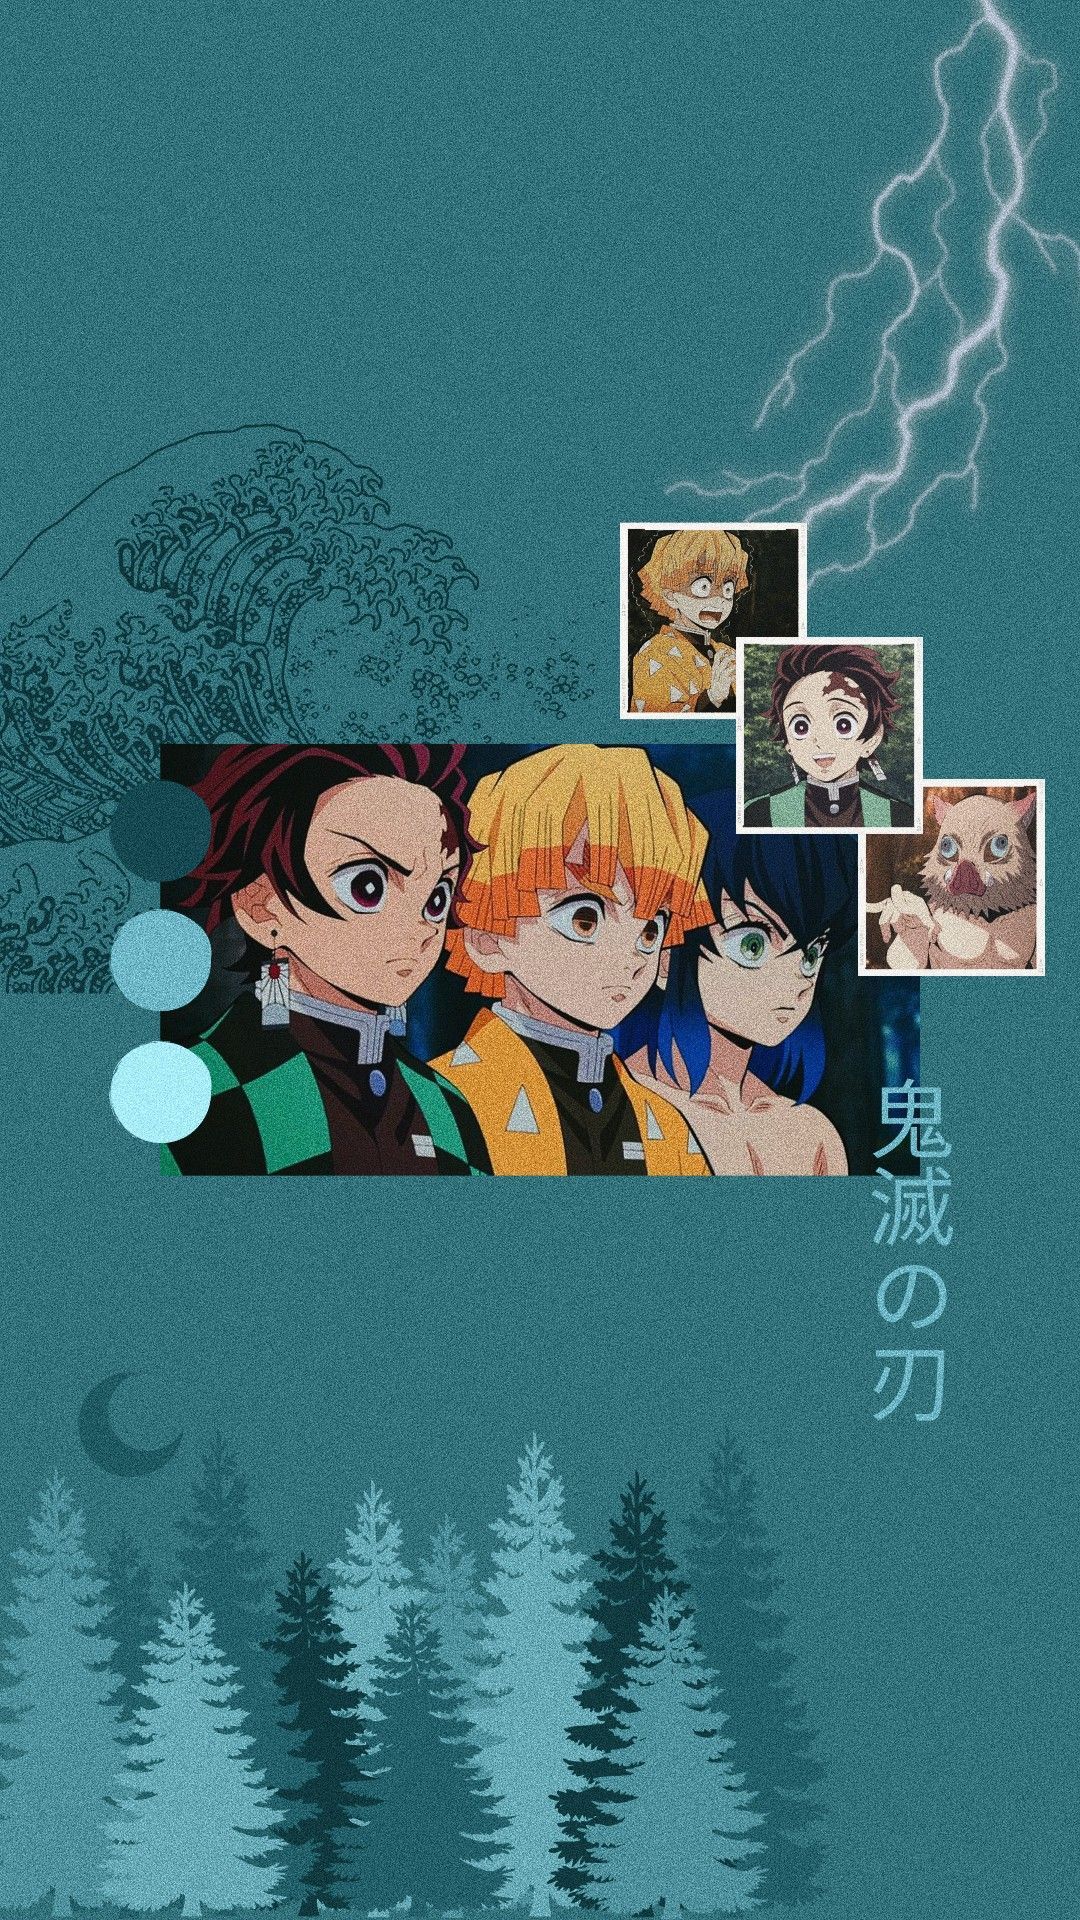 Demon slayer trio wallpaper. Cool anime wallpaper, Anime wallpaper, Anime wallpaper iphone